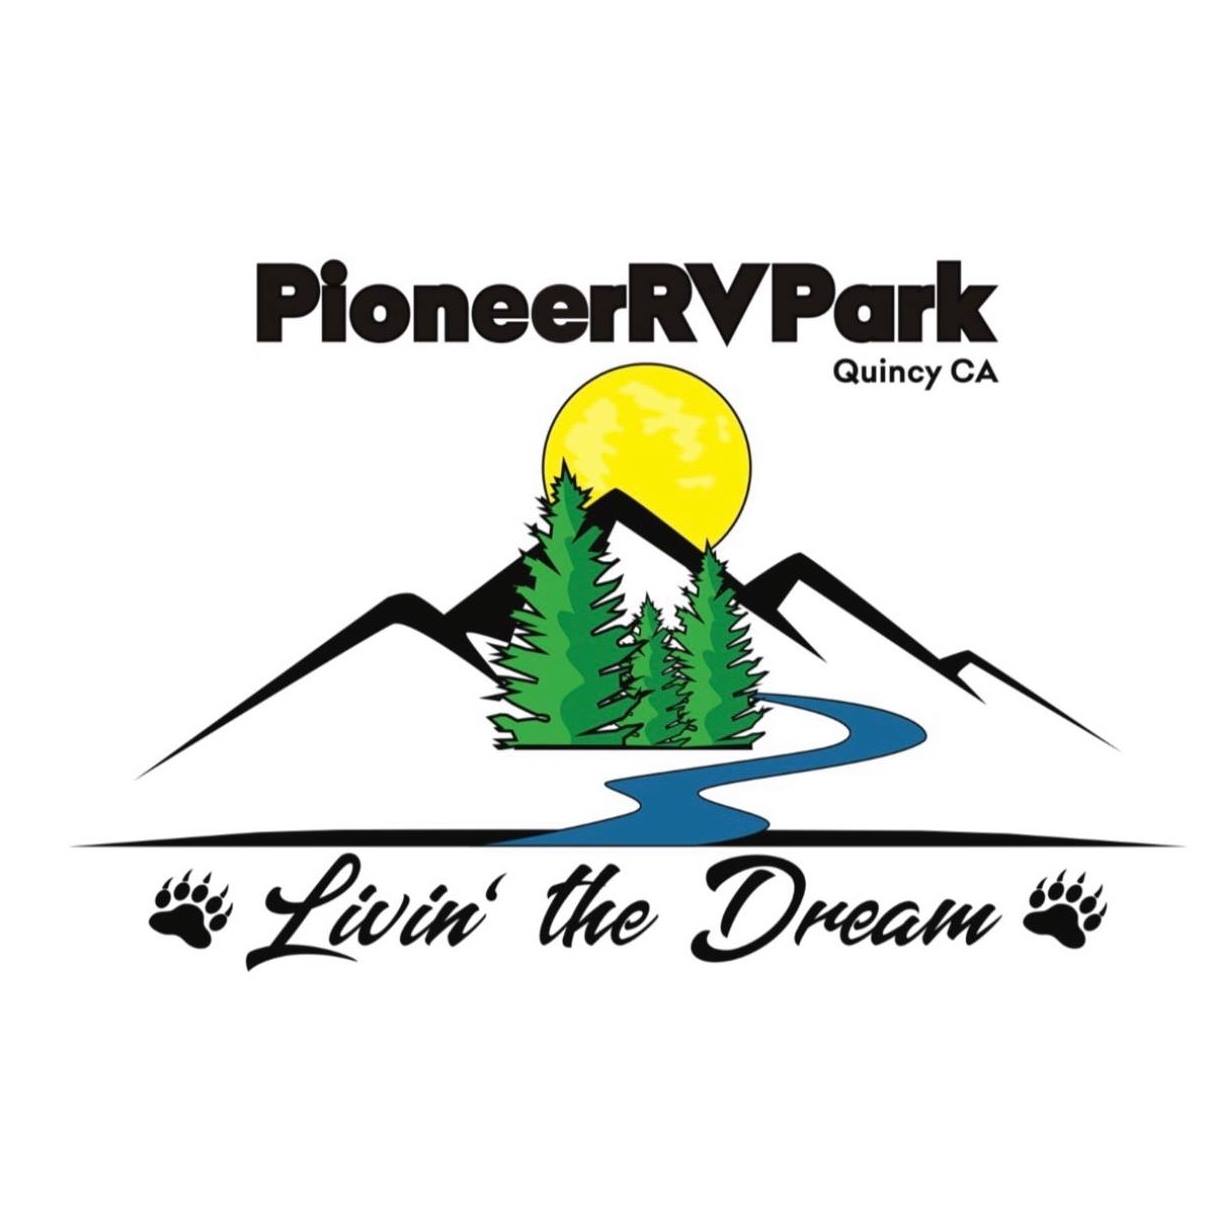 Pioneer RV Park|Park|Travel